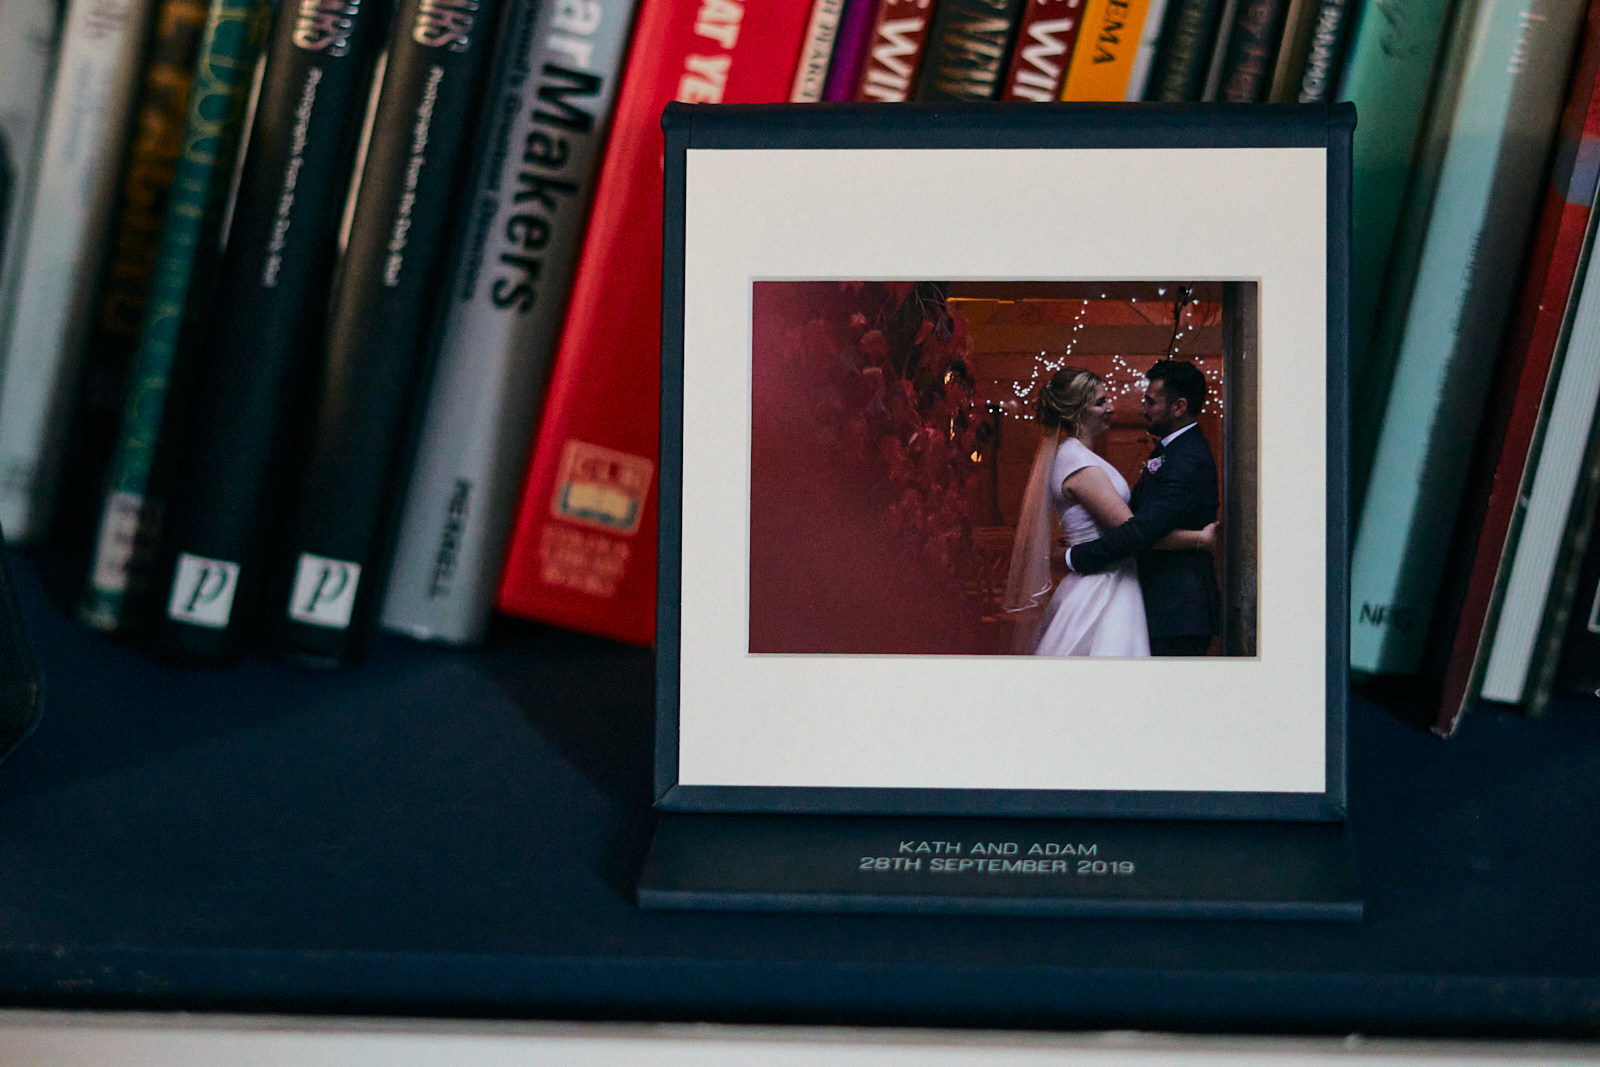 wedding USB case and film books on shelf